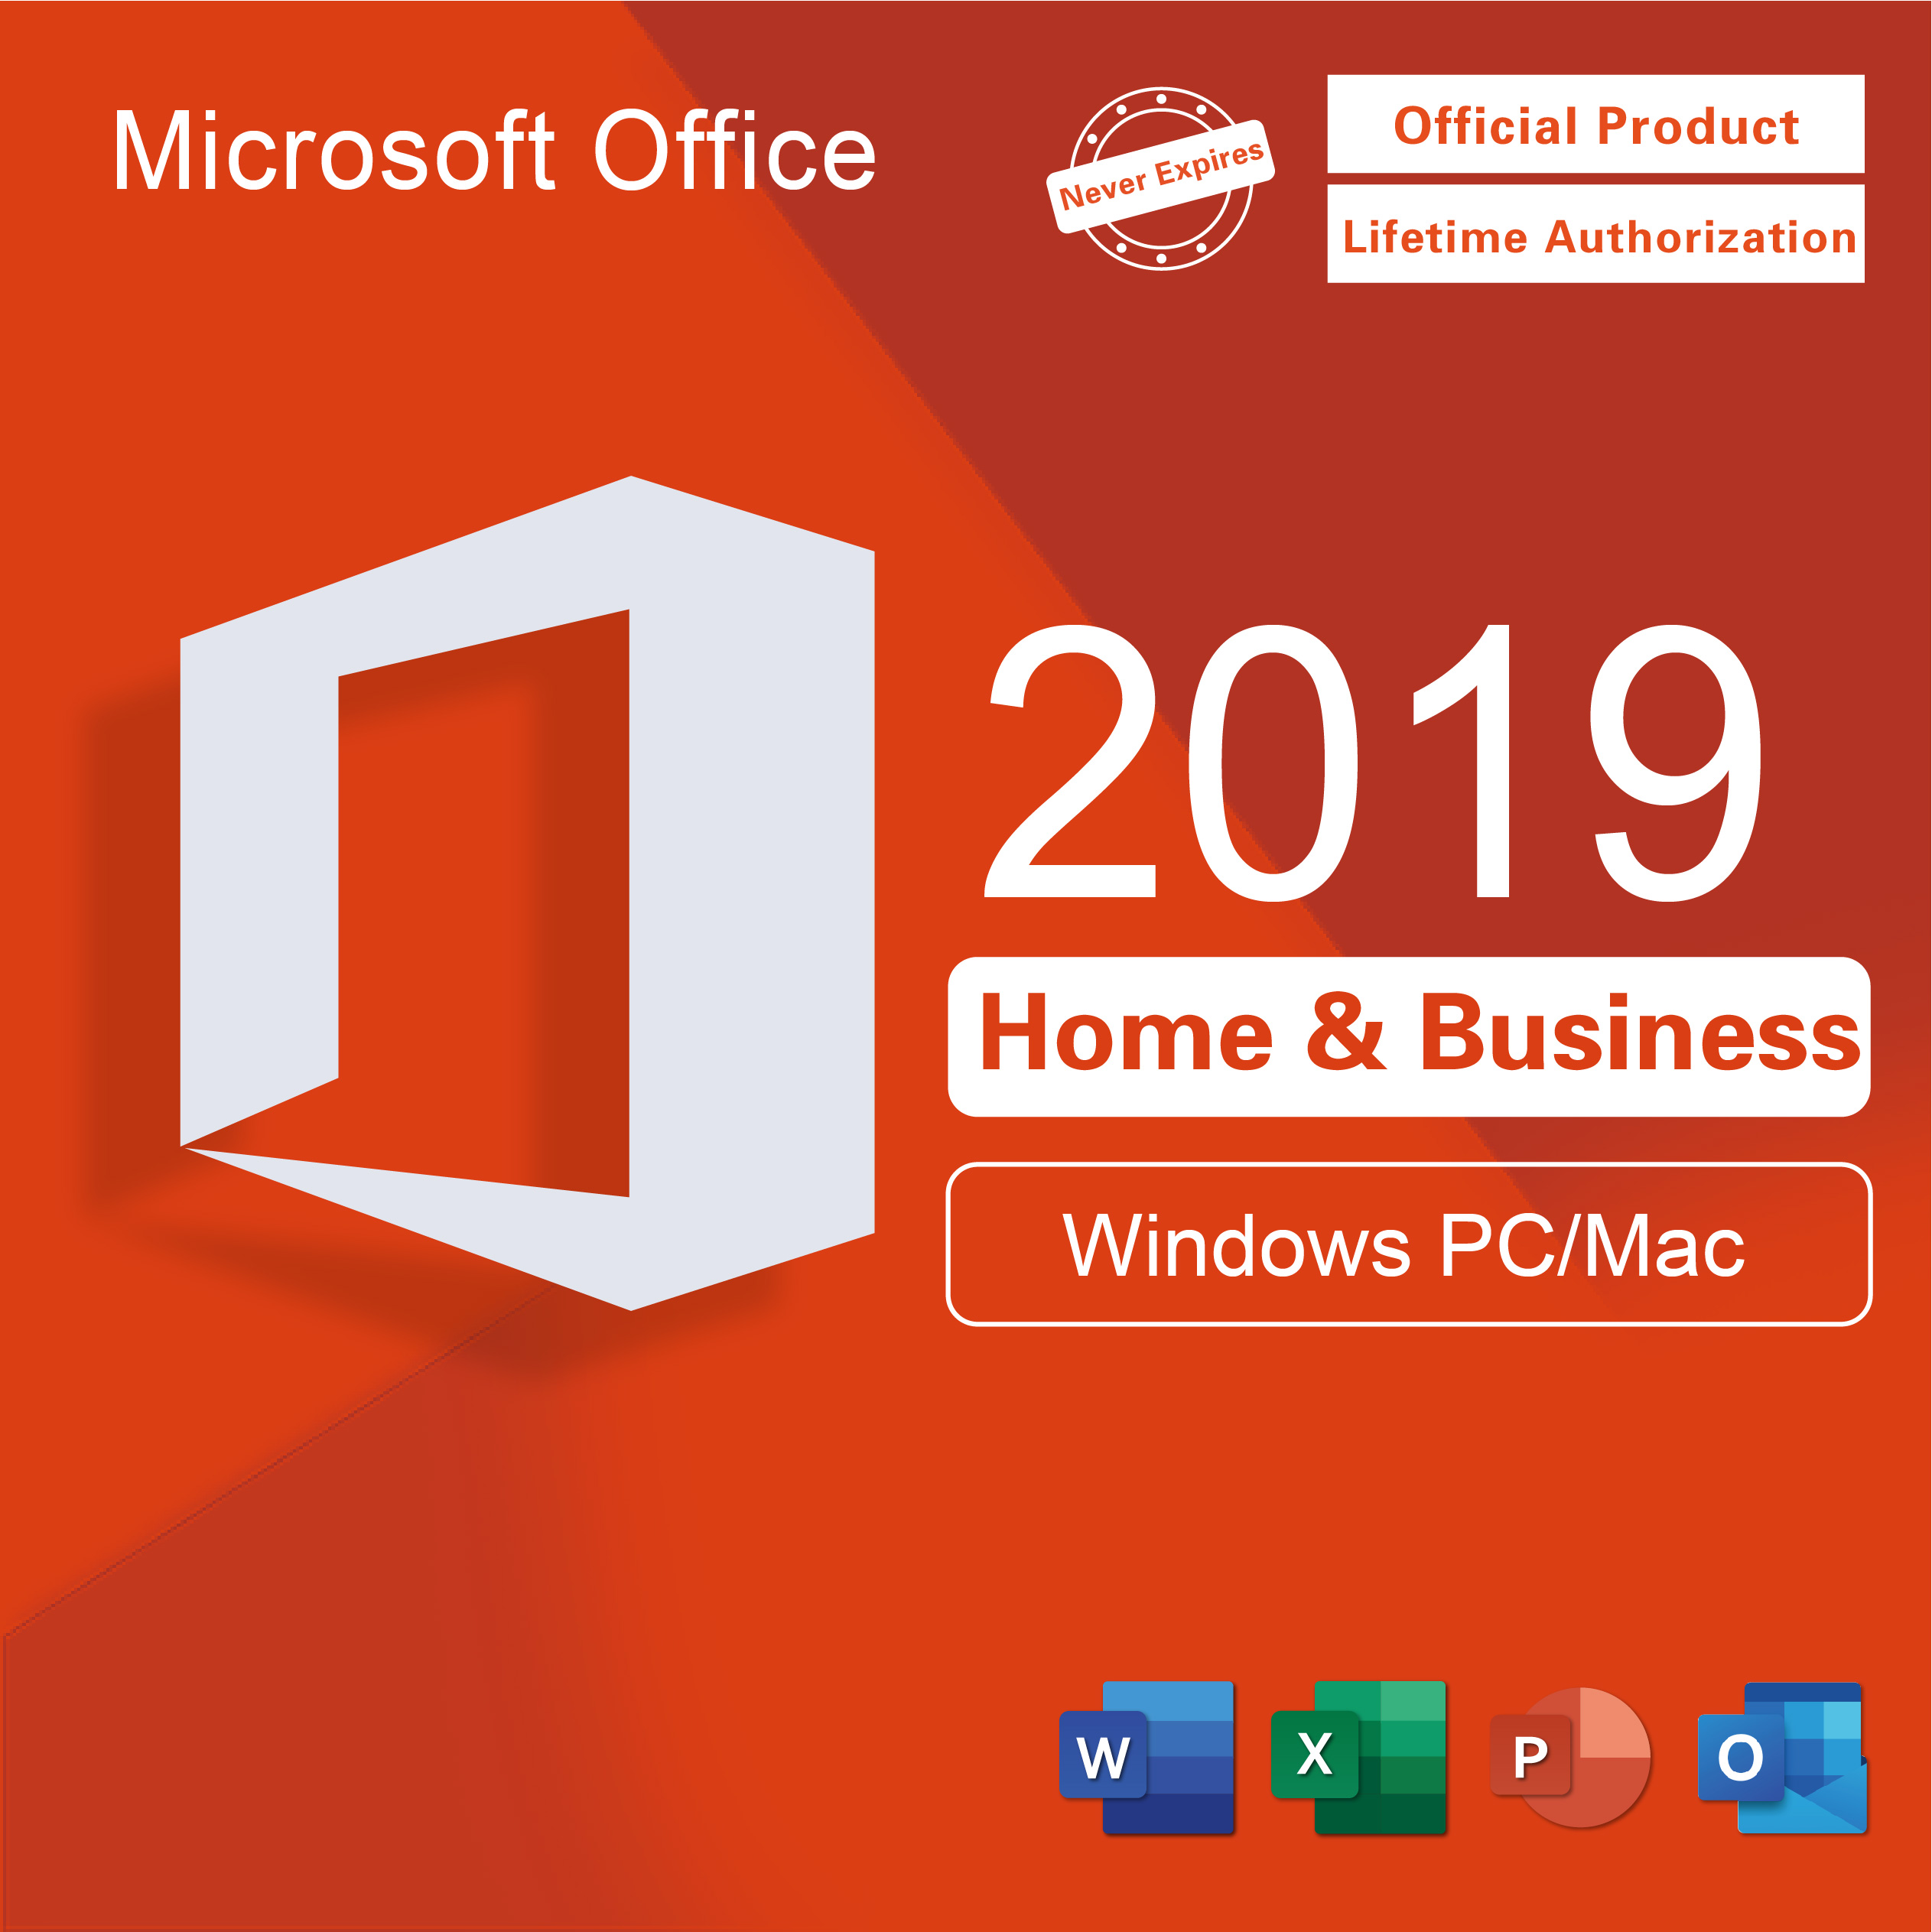 Microsoft Office 2019 Home & Business PC/Mac